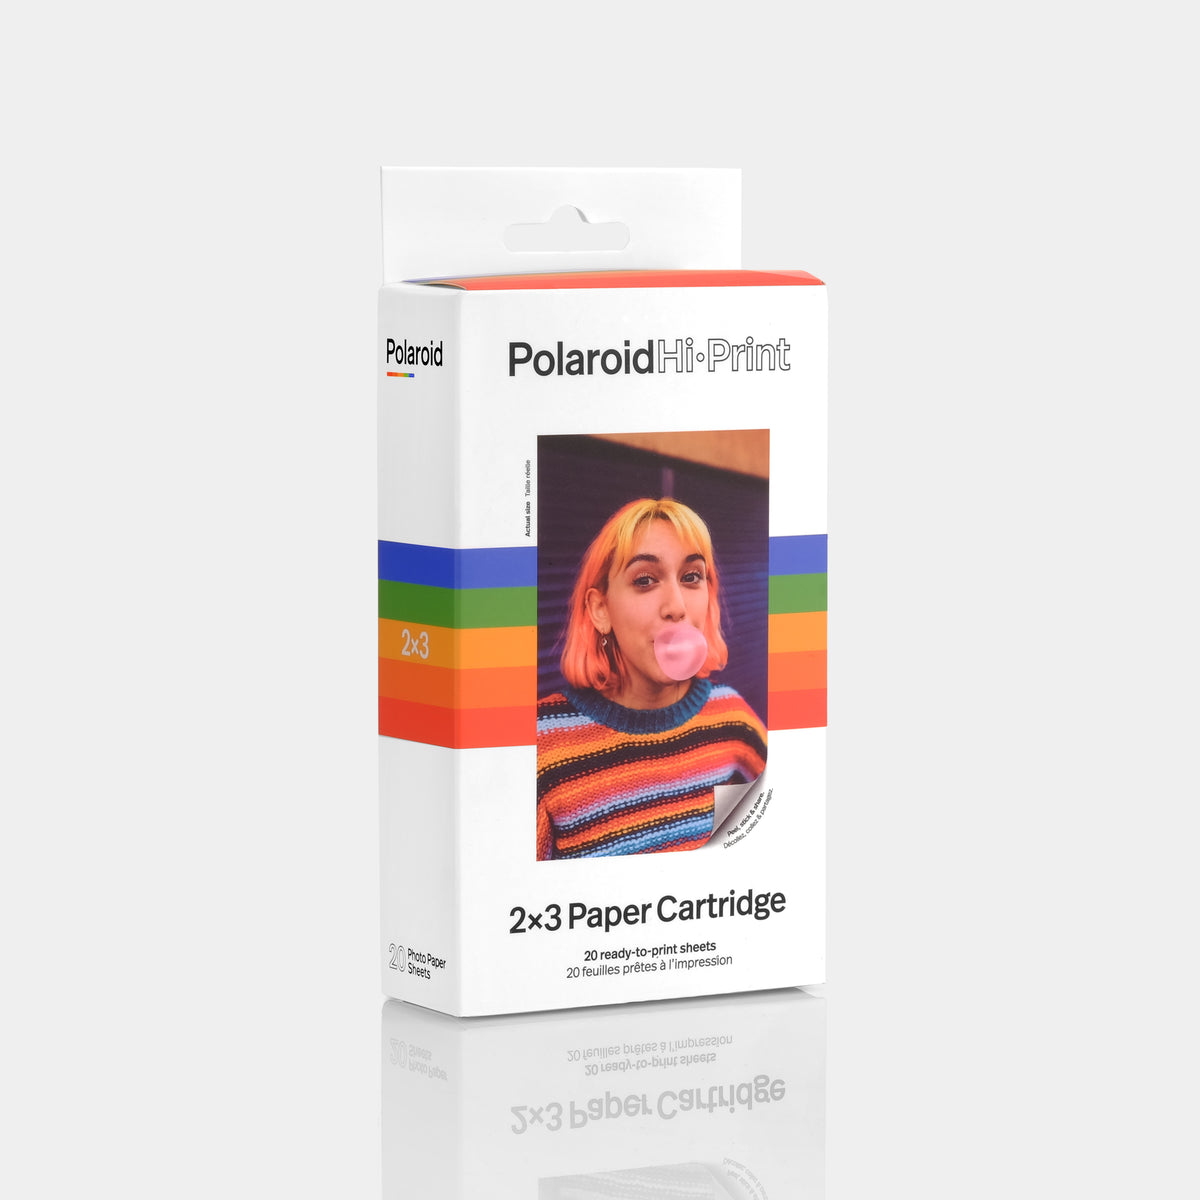 Polaroid Hi-Print 2X3 Paper Cartridge, 20 sheets +  